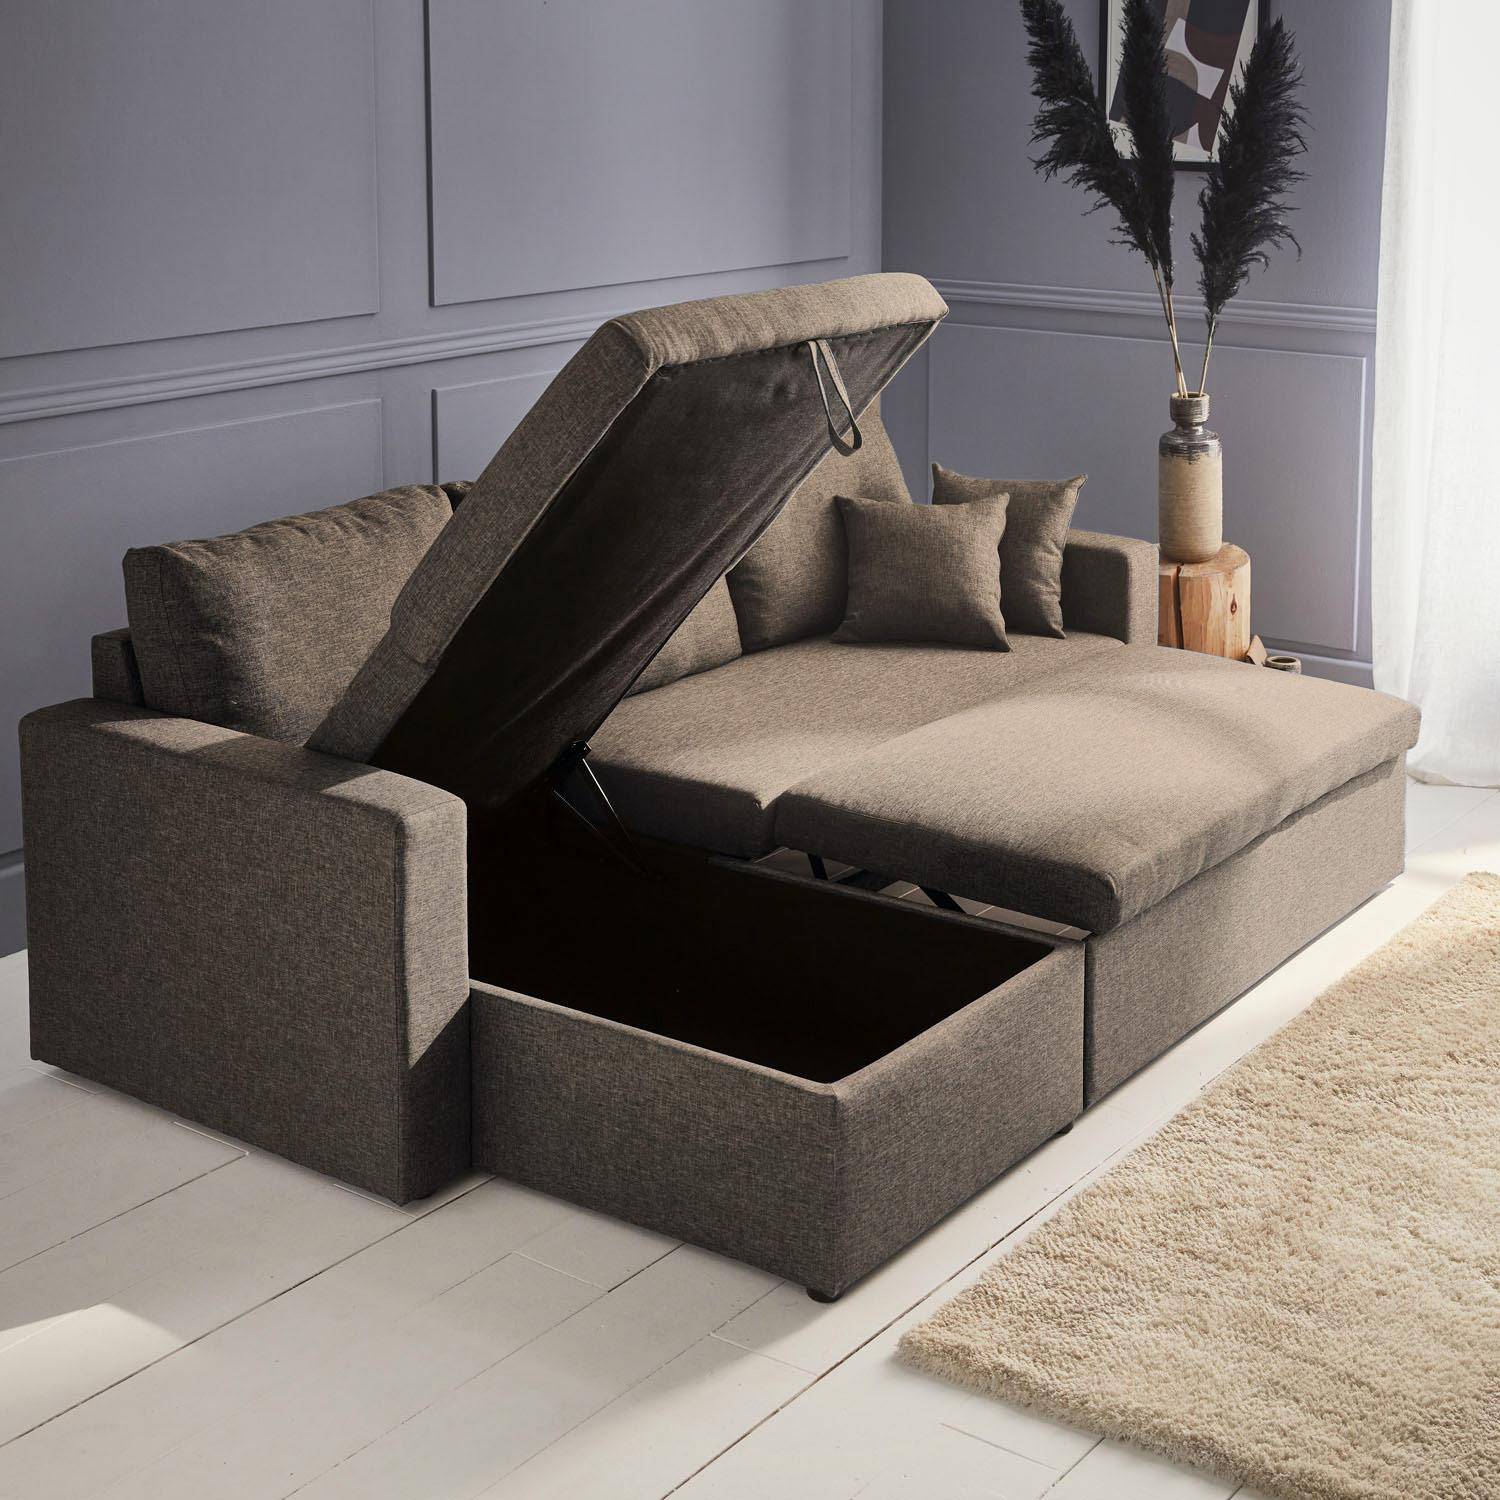 3-seater reversible brown corner sofa bed with storage box, brown, L219xD81xH68cm, IDA,sweeek,Photo3